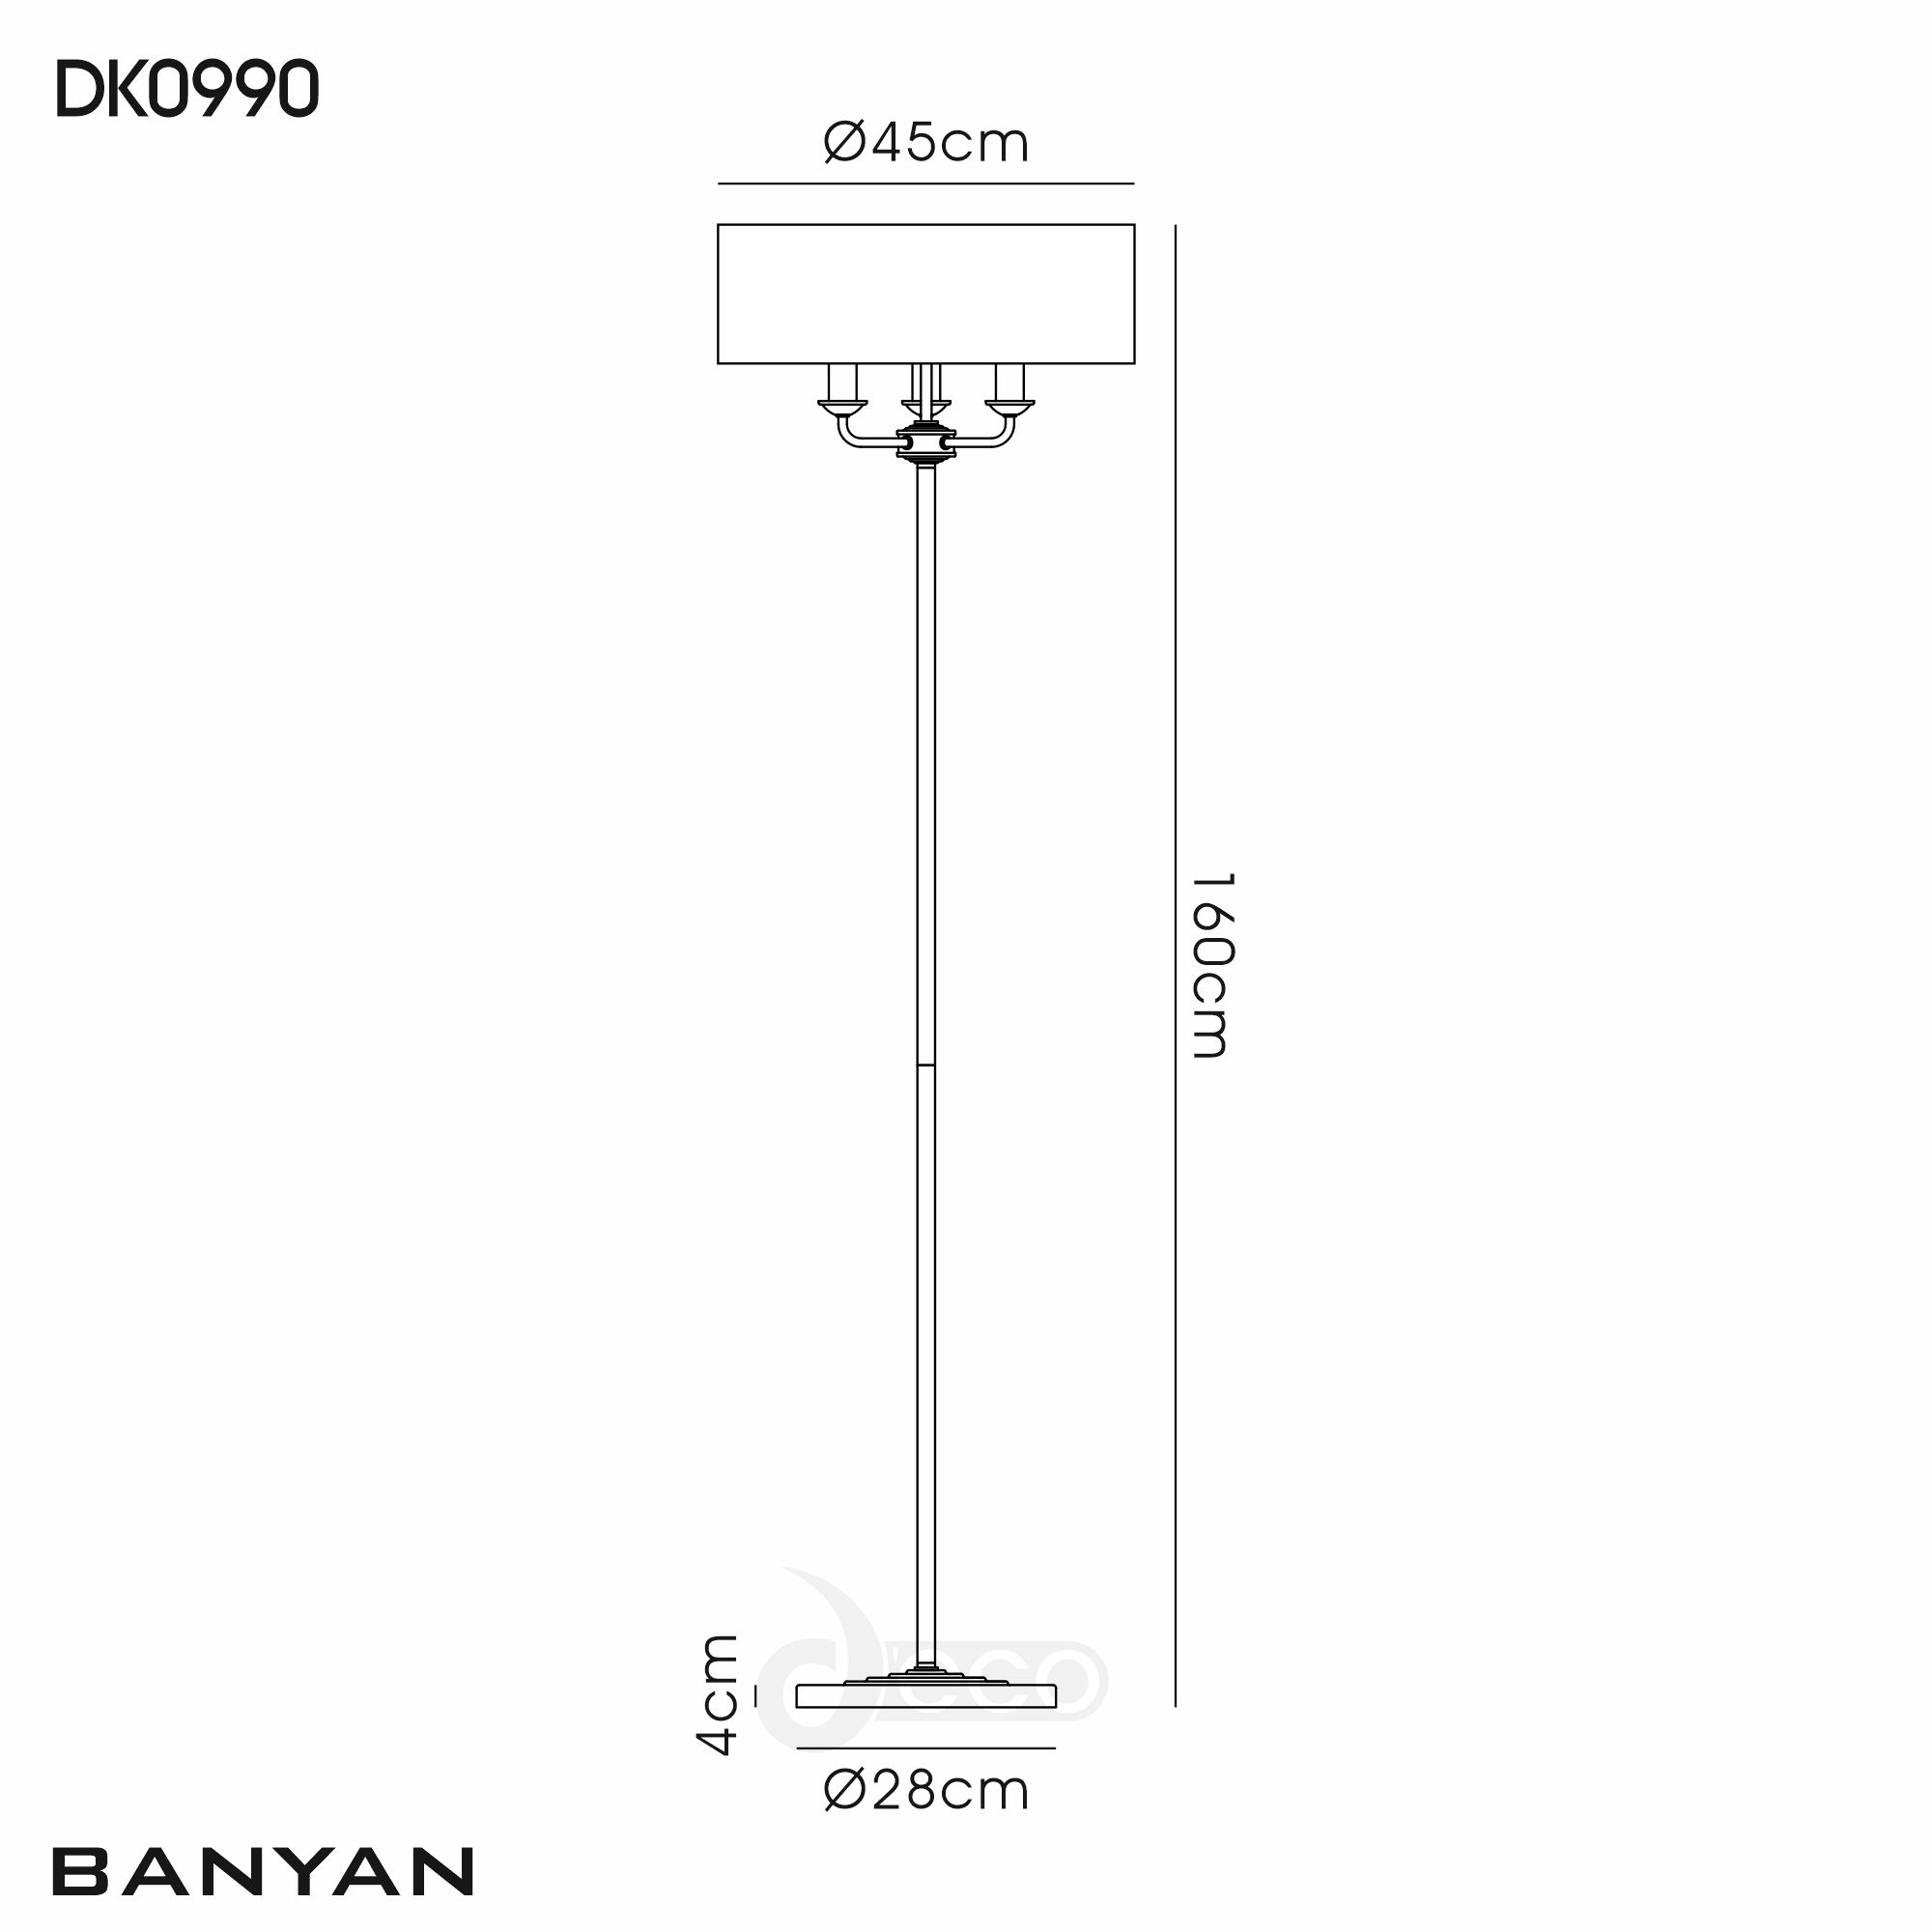 DK0990  Banyan 45cm 3 Light Floor Lamp Champagne Gold, Ivory Pearl